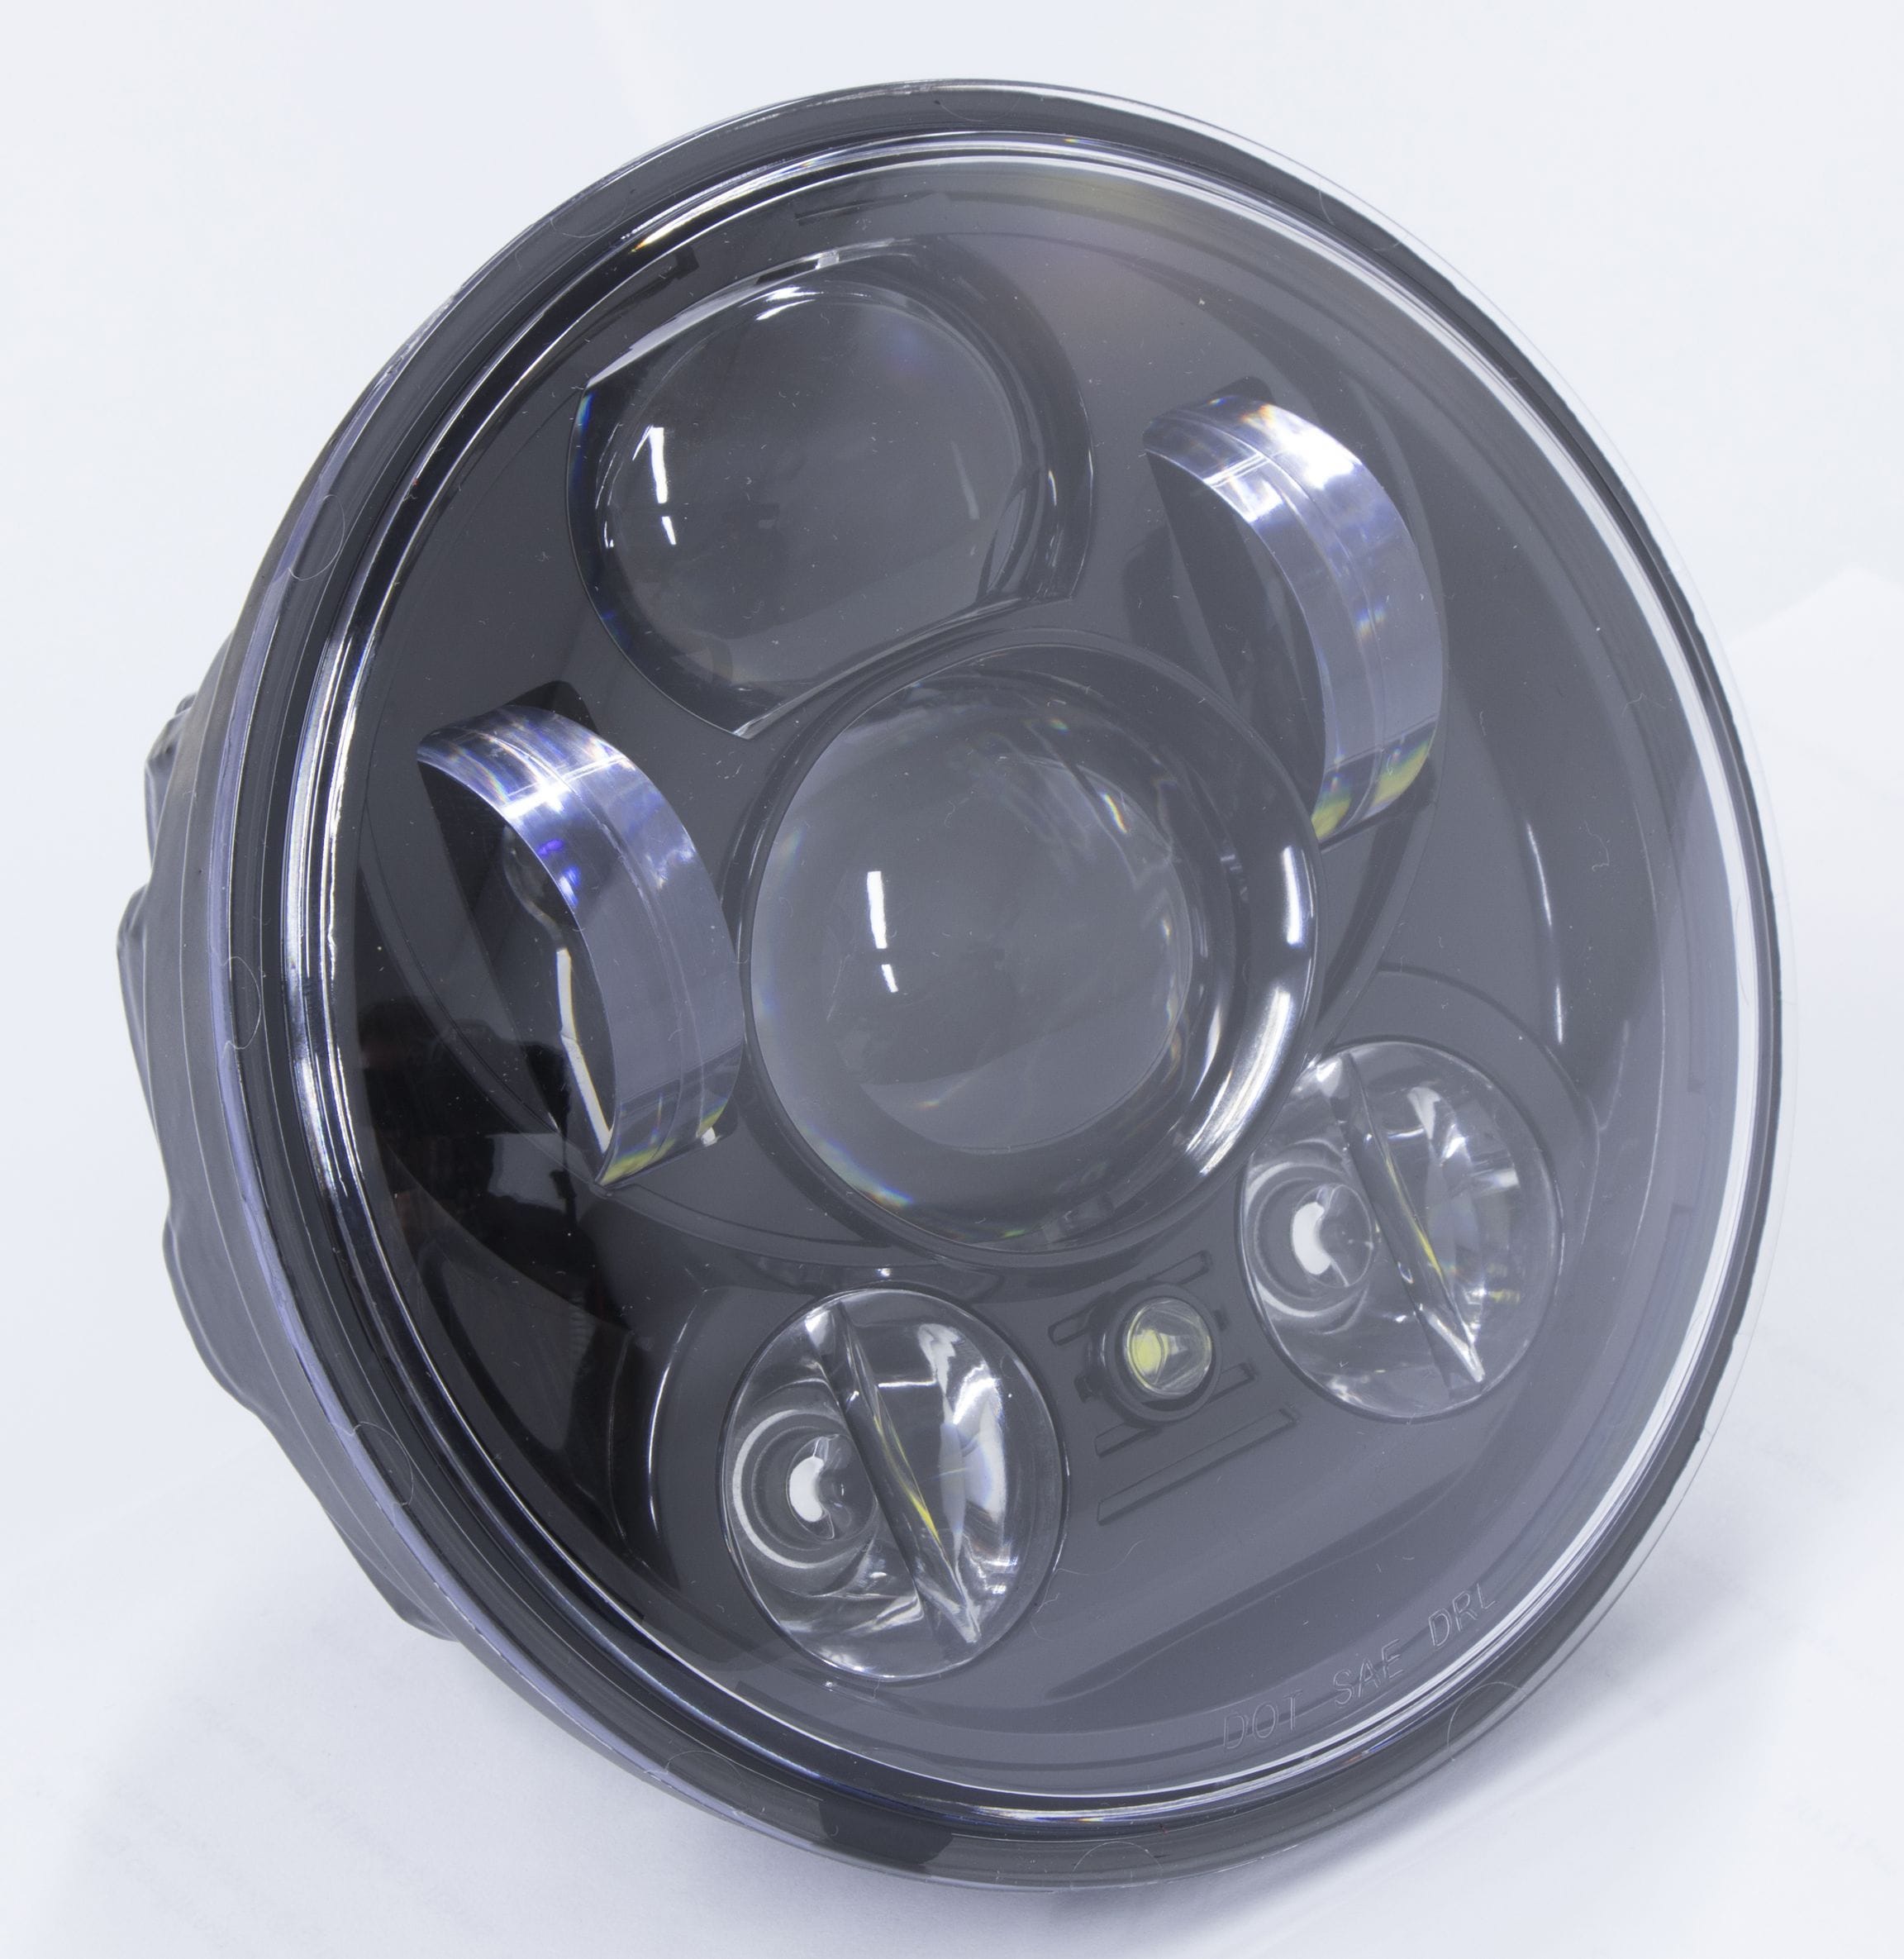 Motorcycle Headlights - 5.75" 50w LED Headlight Front